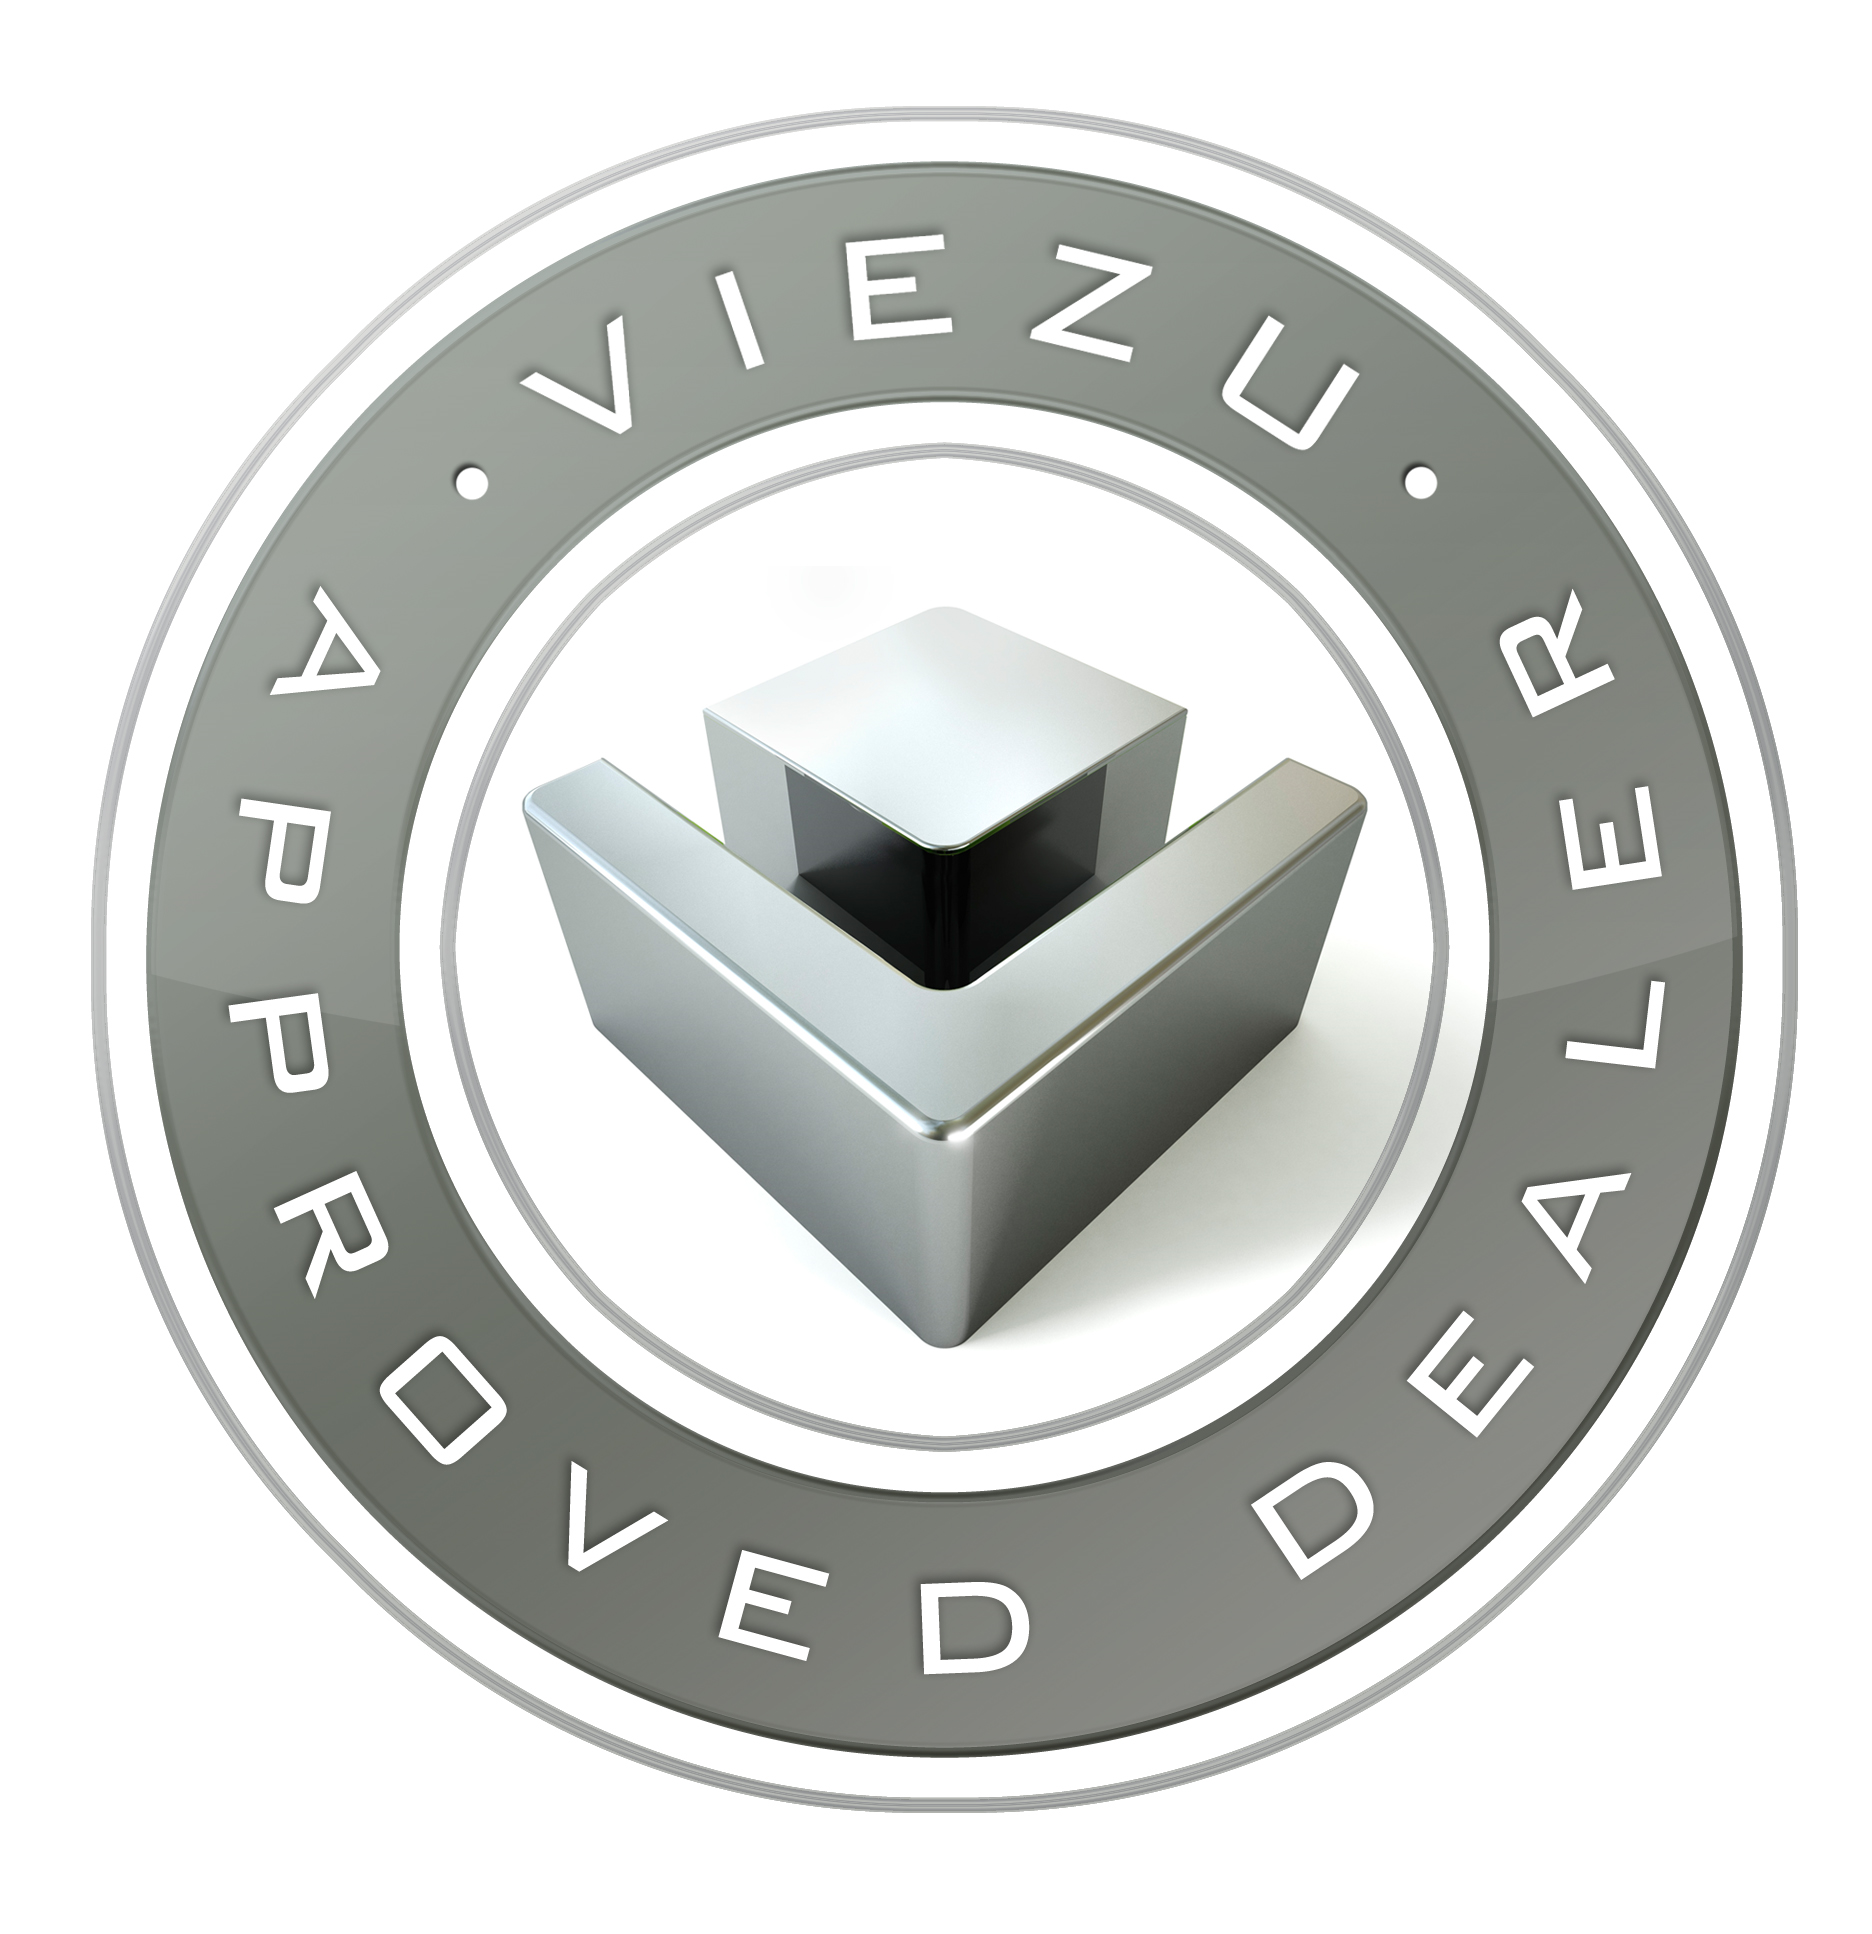 viezu approved dealer